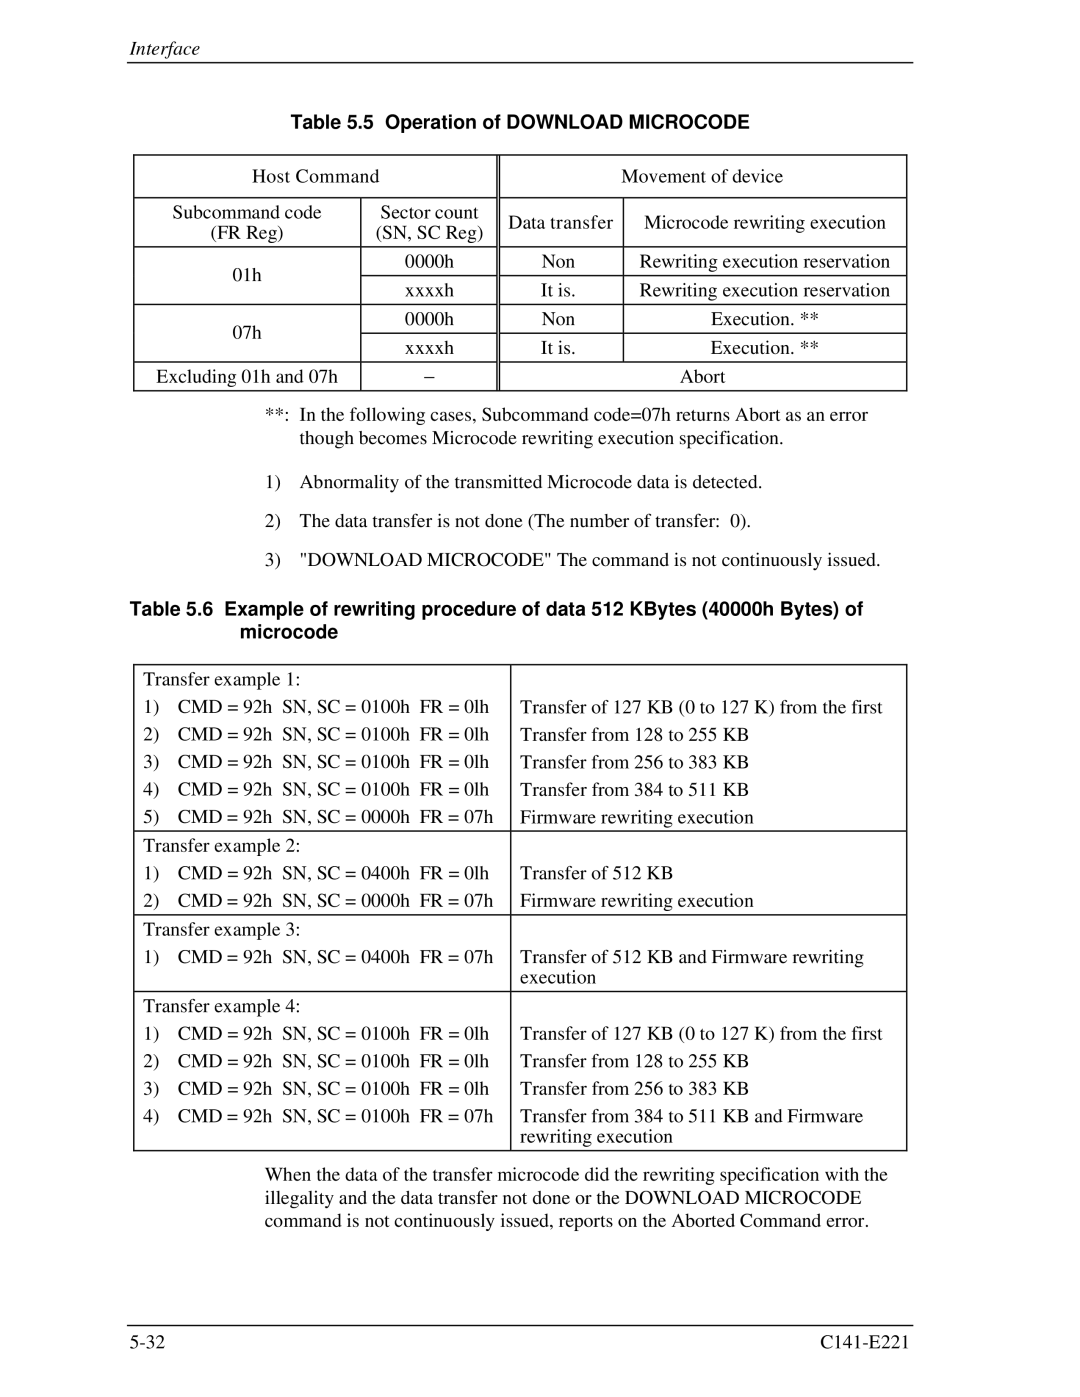 Fujitsu MHV2080AS, MHV2060AS, MHV2040AS manual Operation of Download Microcode 